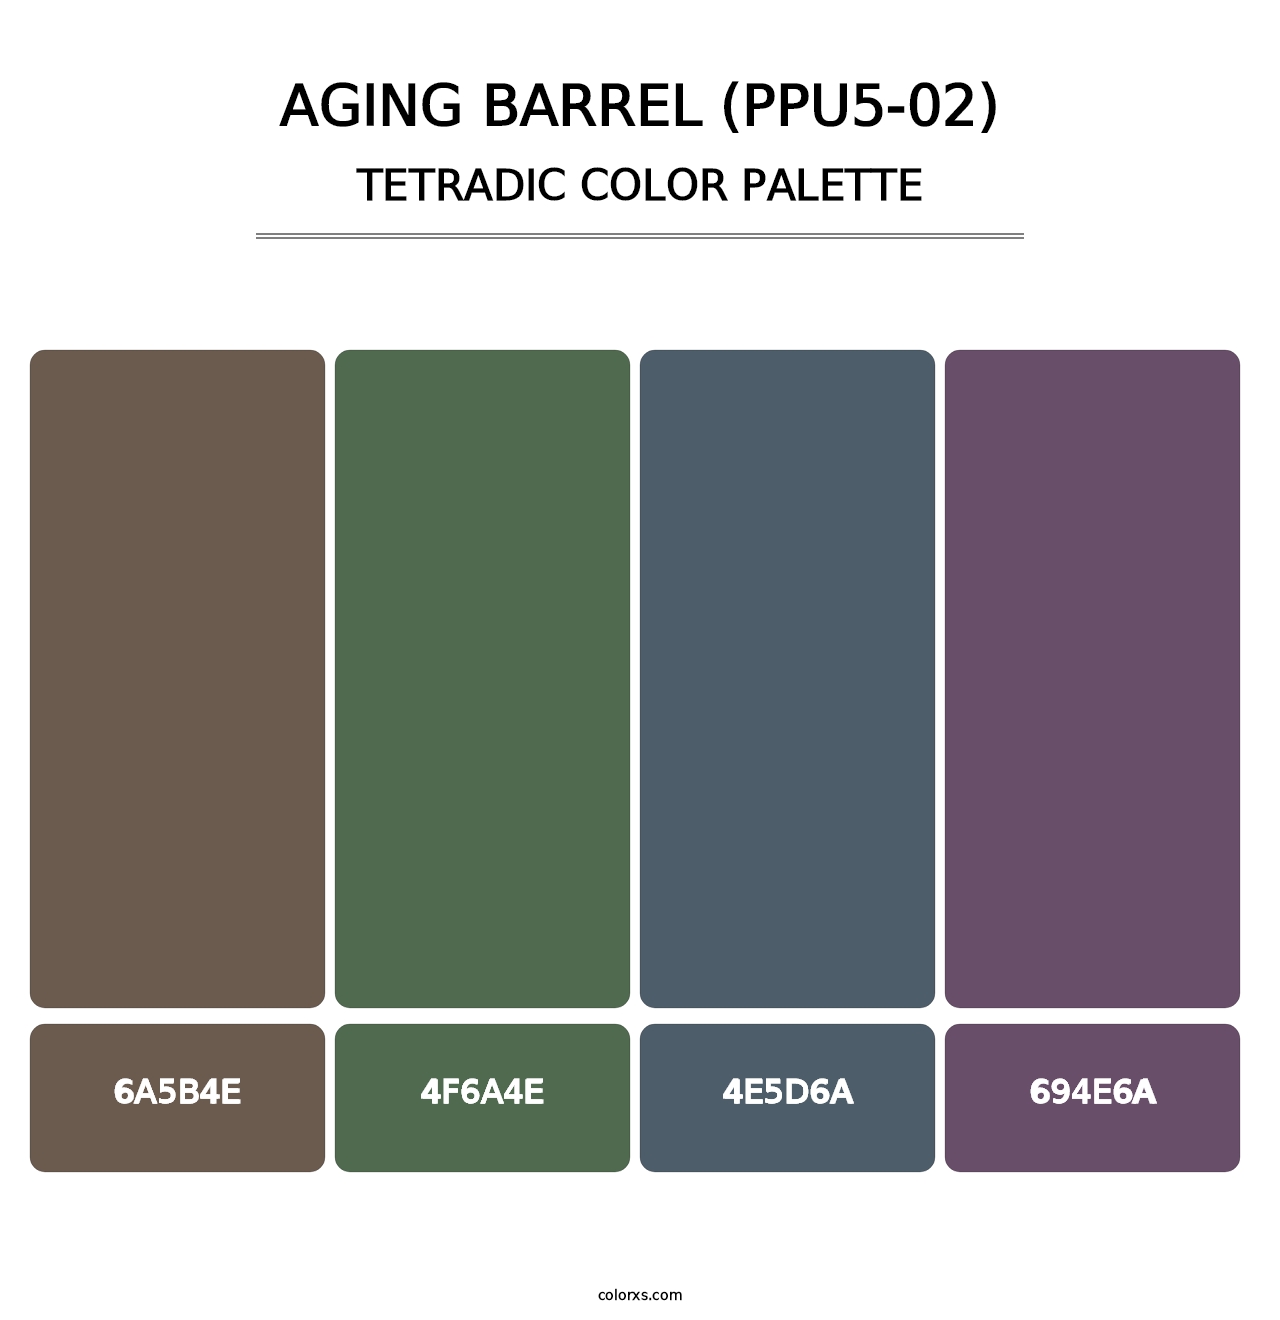 Aging Barrel (PPU5-02) - Tetradic Color Palette